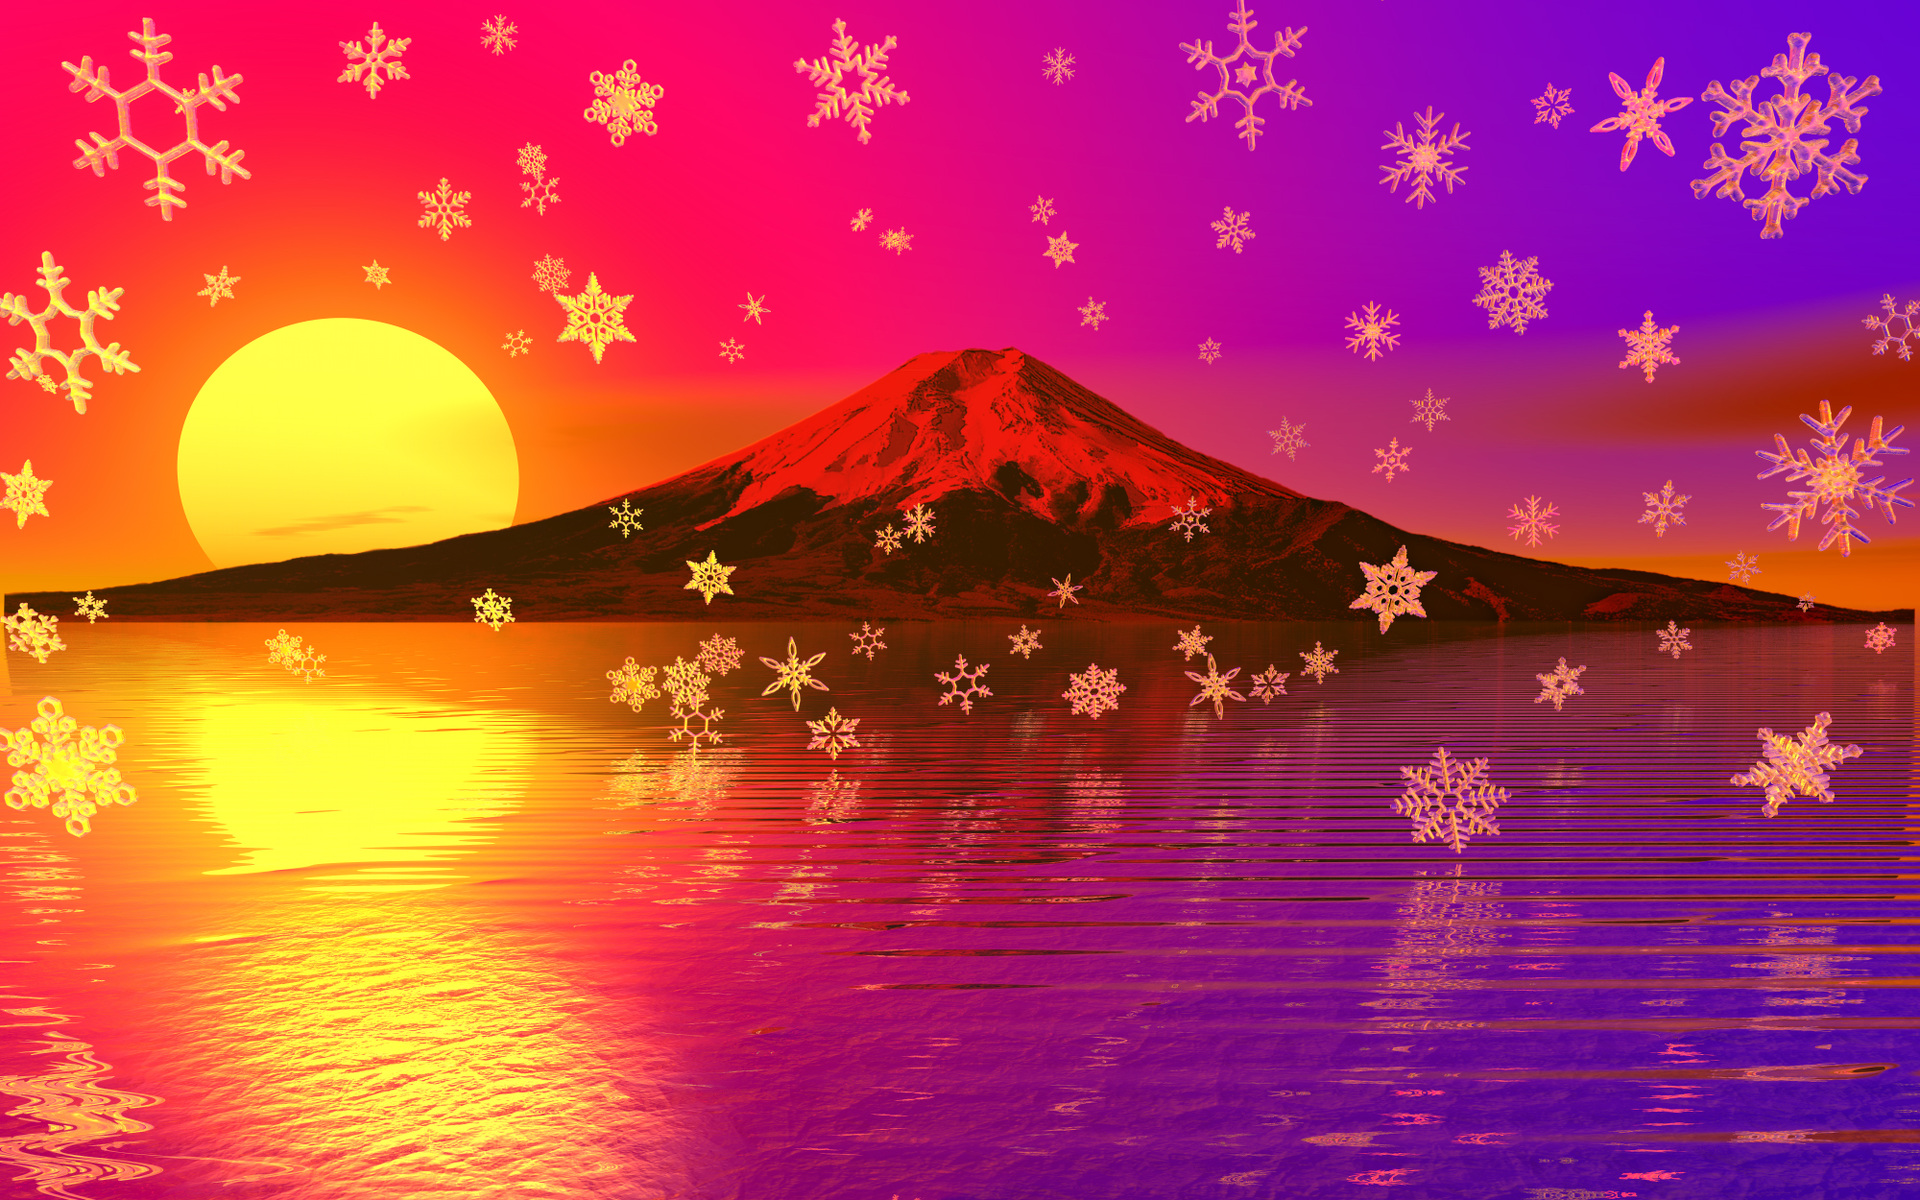 3dcg 雪の結晶と赤富士 壁紙19x10 壁紙館